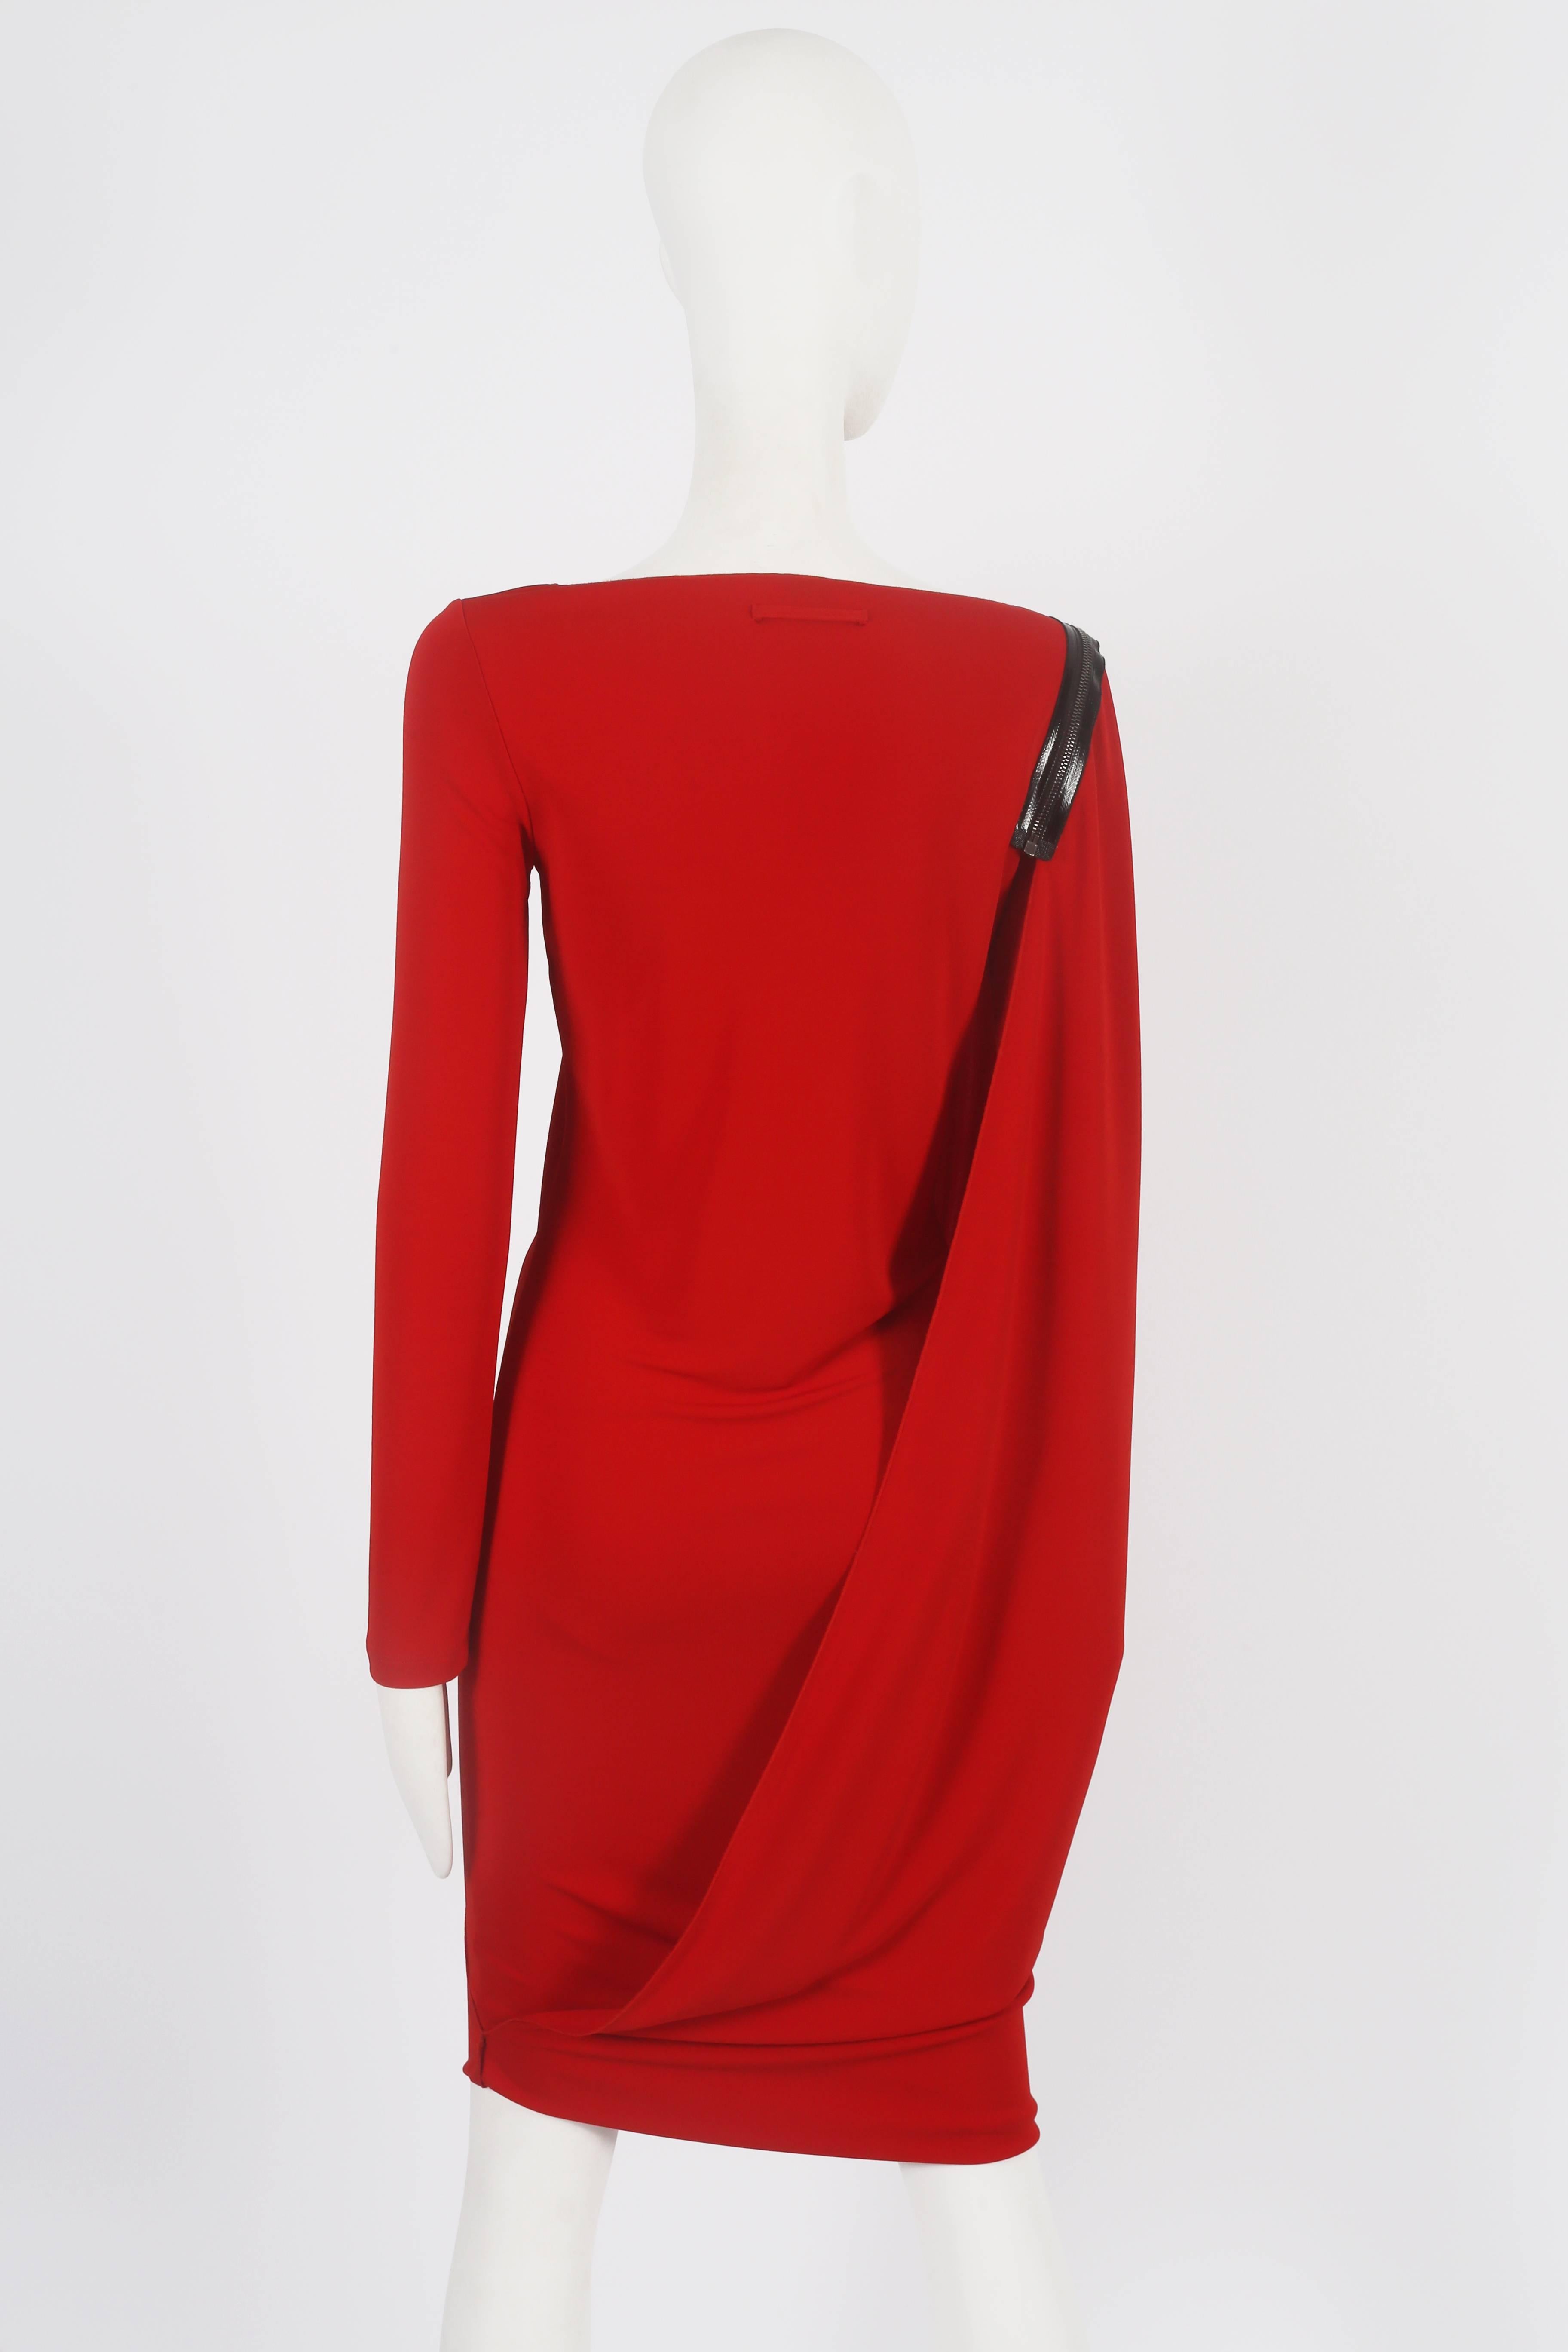 Jean Paul Gaultier red convertible zip dress, circa 2011 1